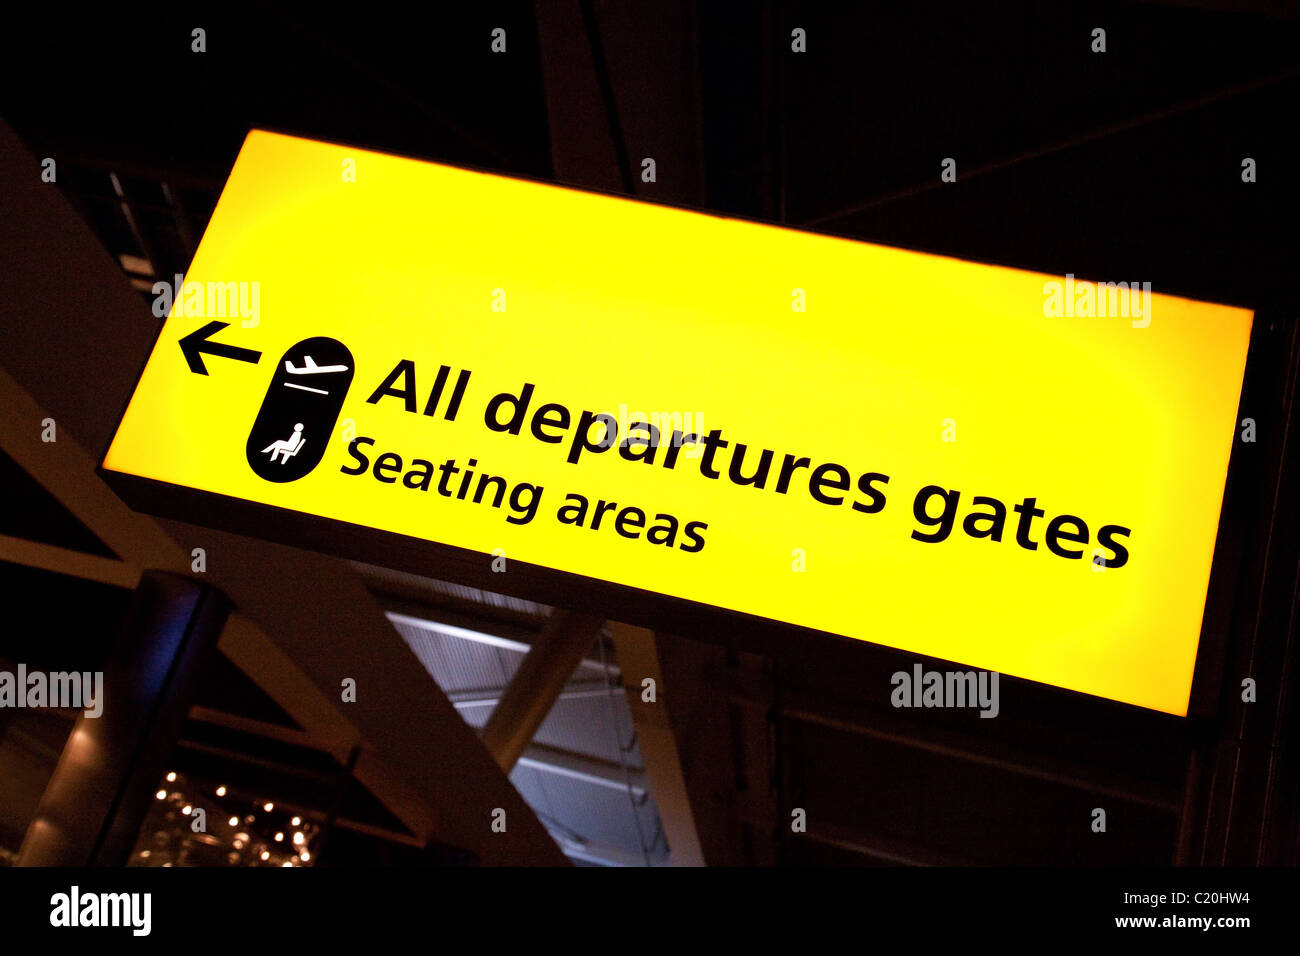 Sign to All departures gates, terminal 5, Heathrow airport, London UK Stock Photo